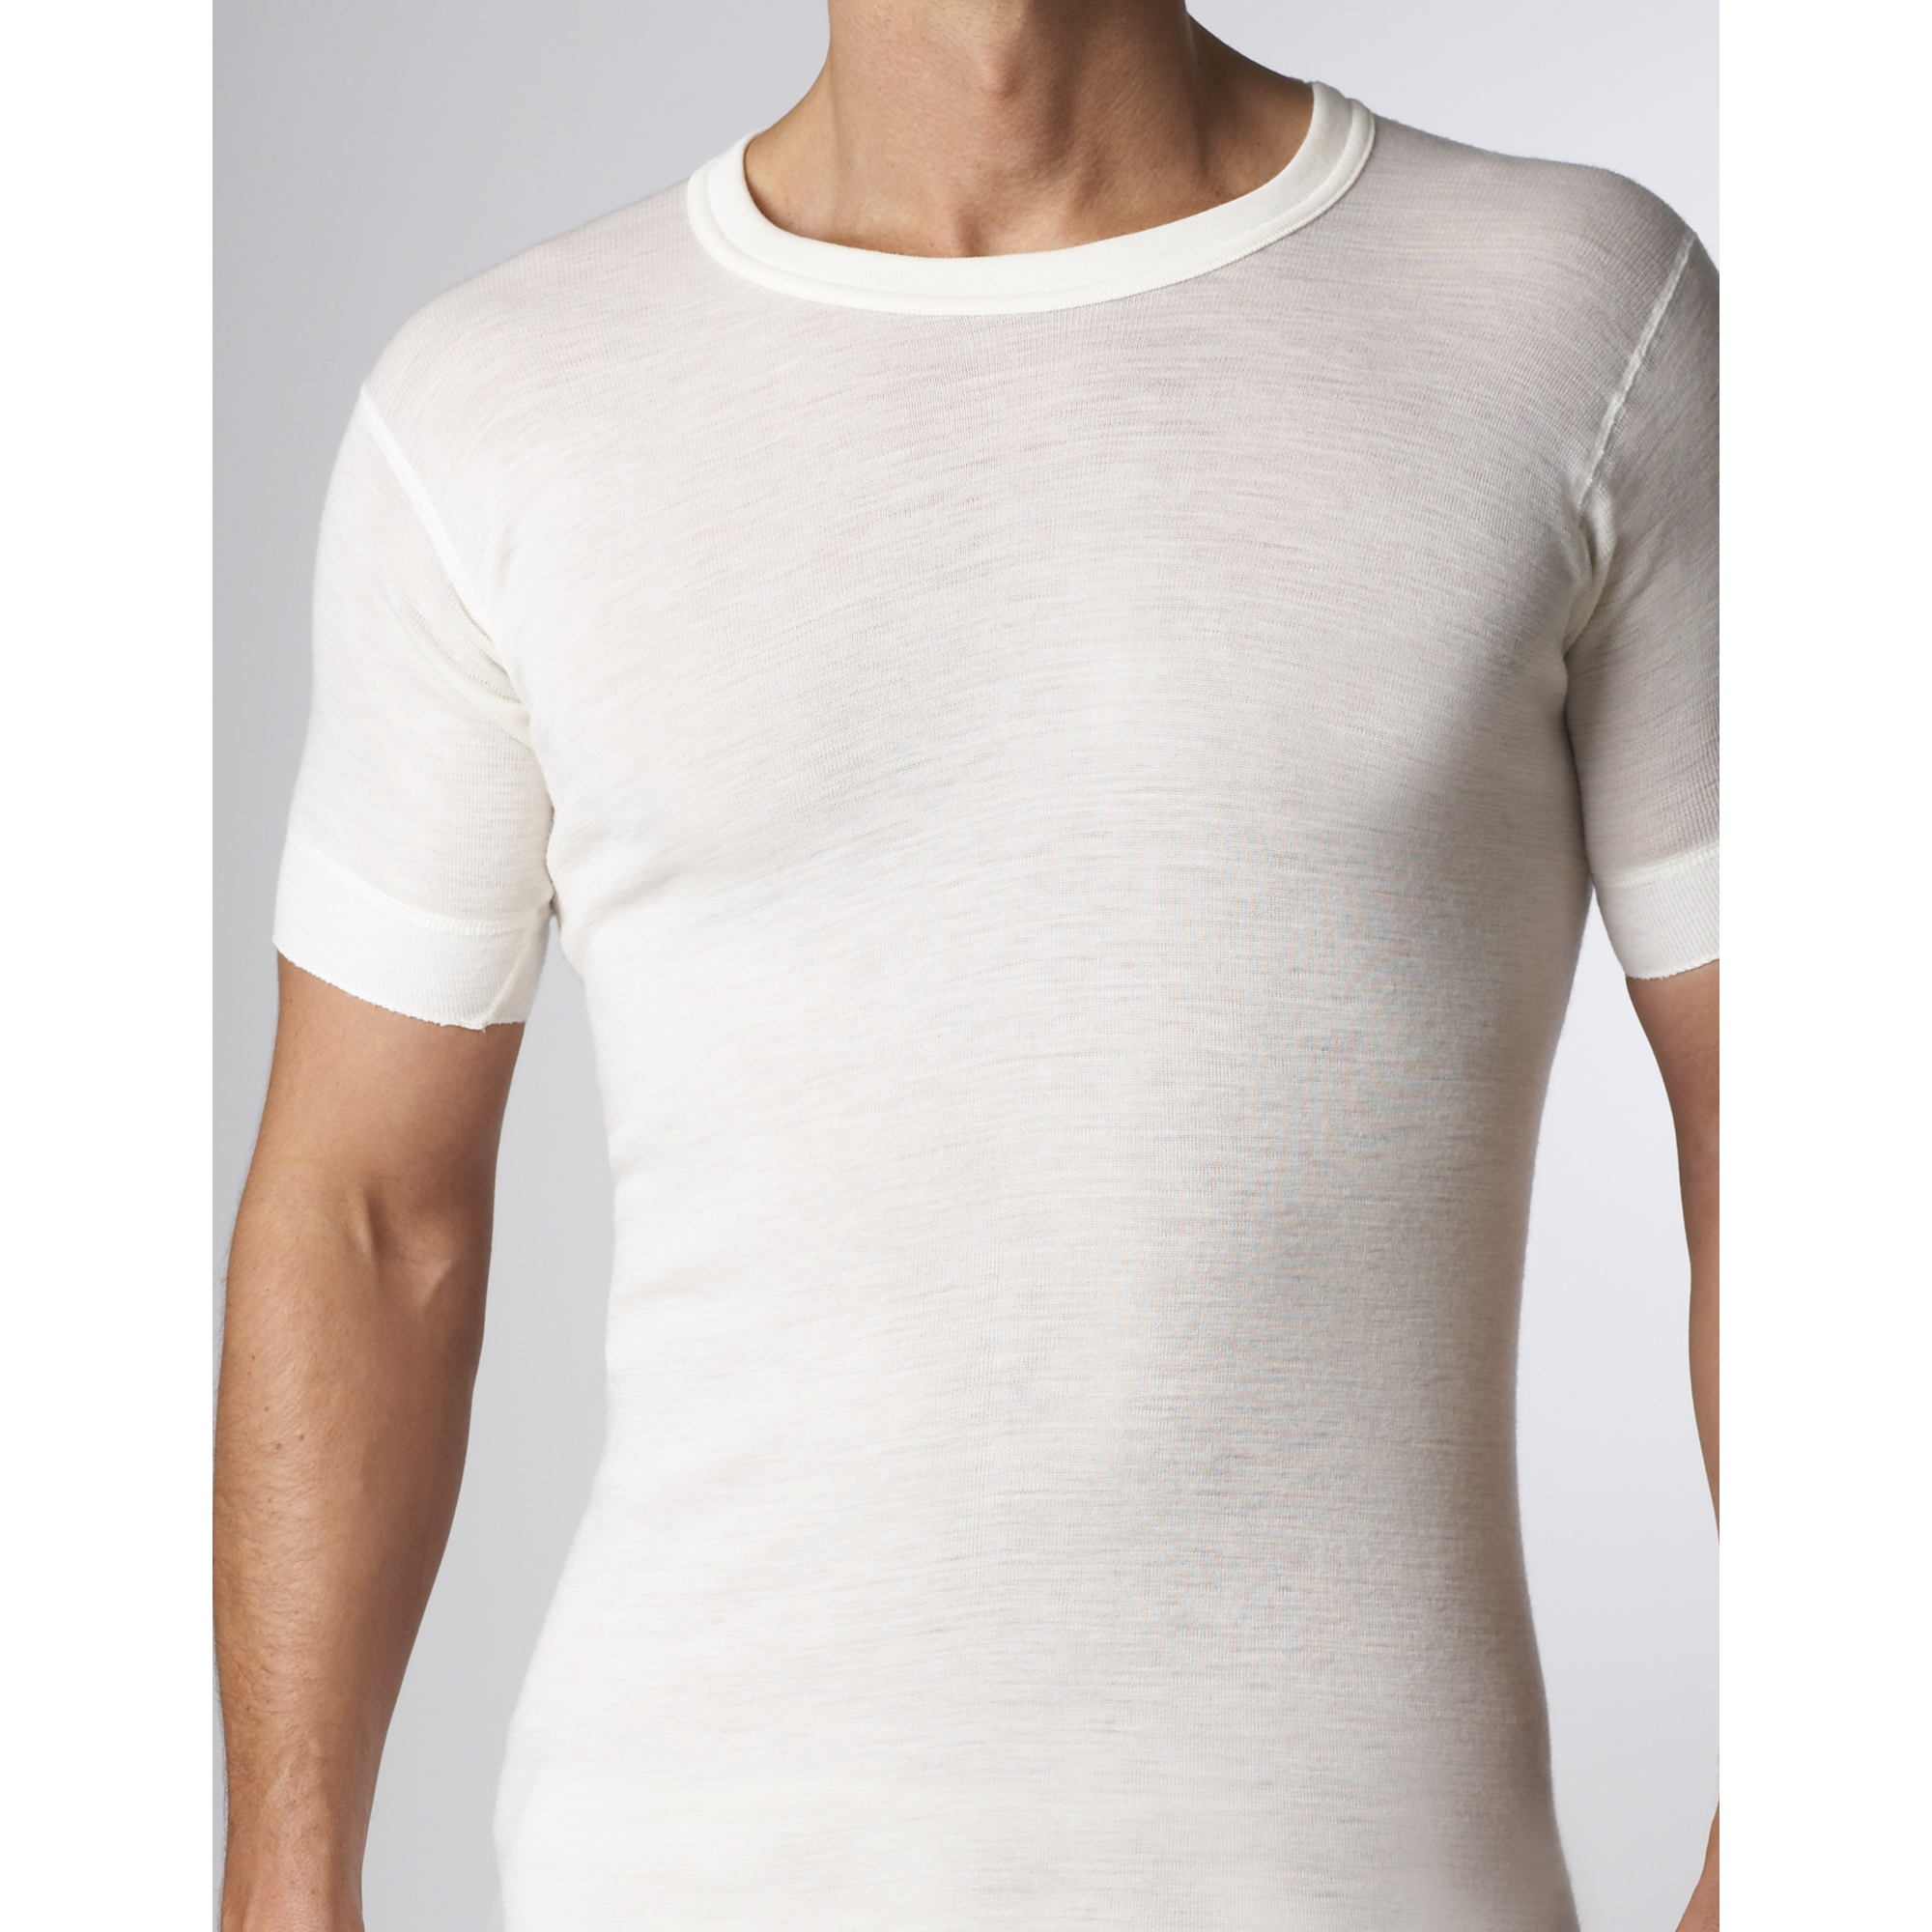 Stanfield's, Men's Superwash Wool Short Sleeve Shirt, Size L, Color NATURAL, Model 4311-Natural-L